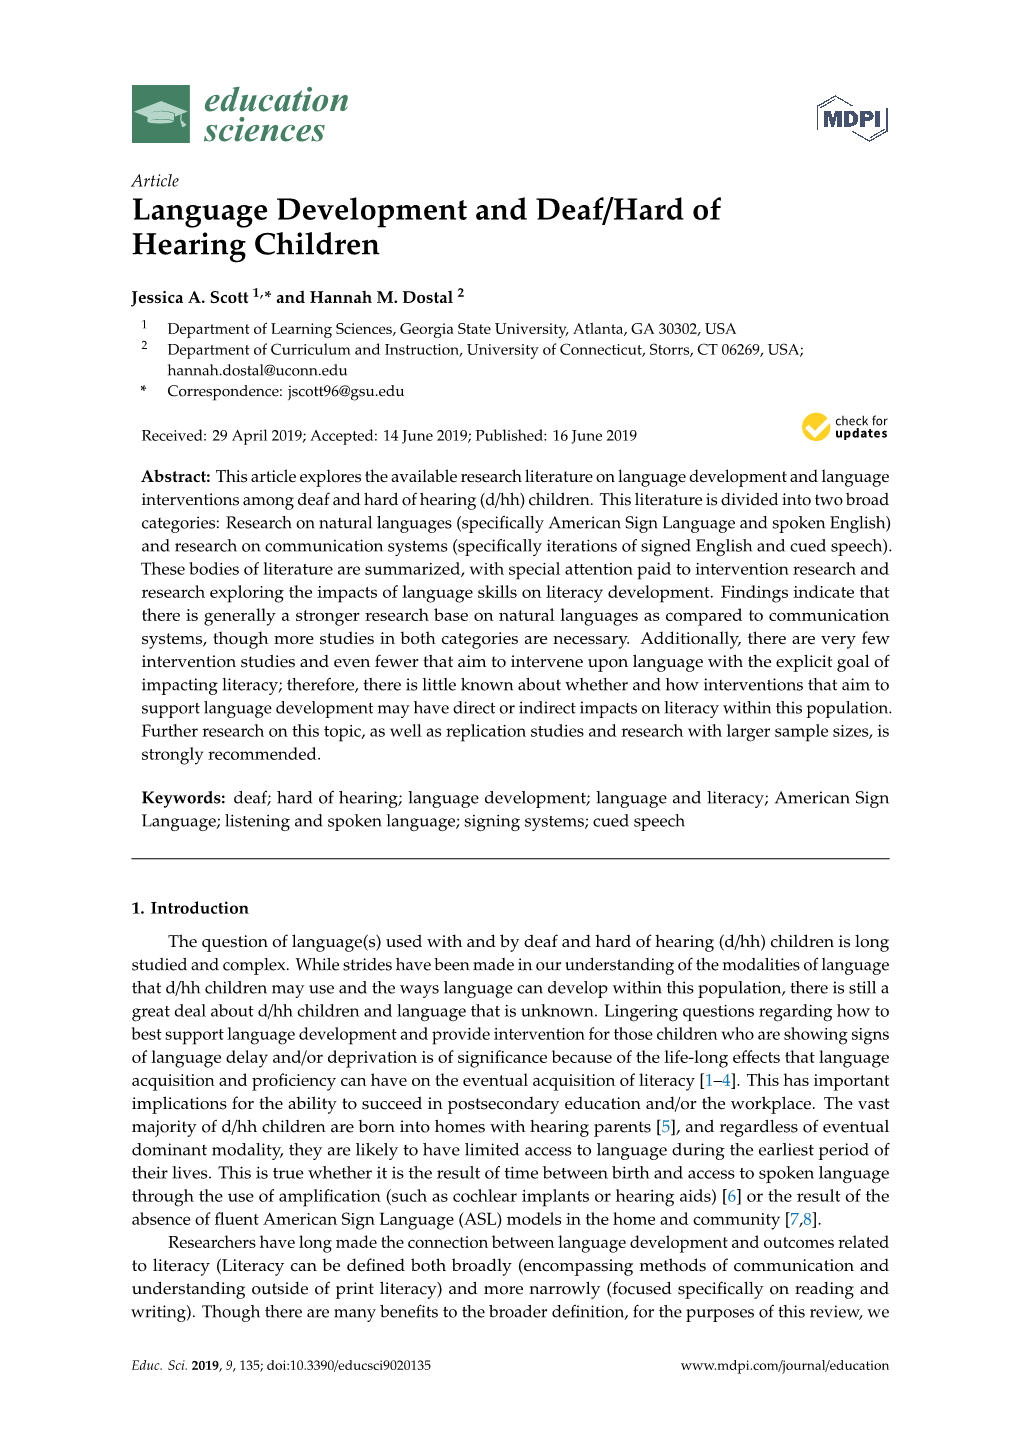 Language Development and Deaf/Hard of Hearing Children